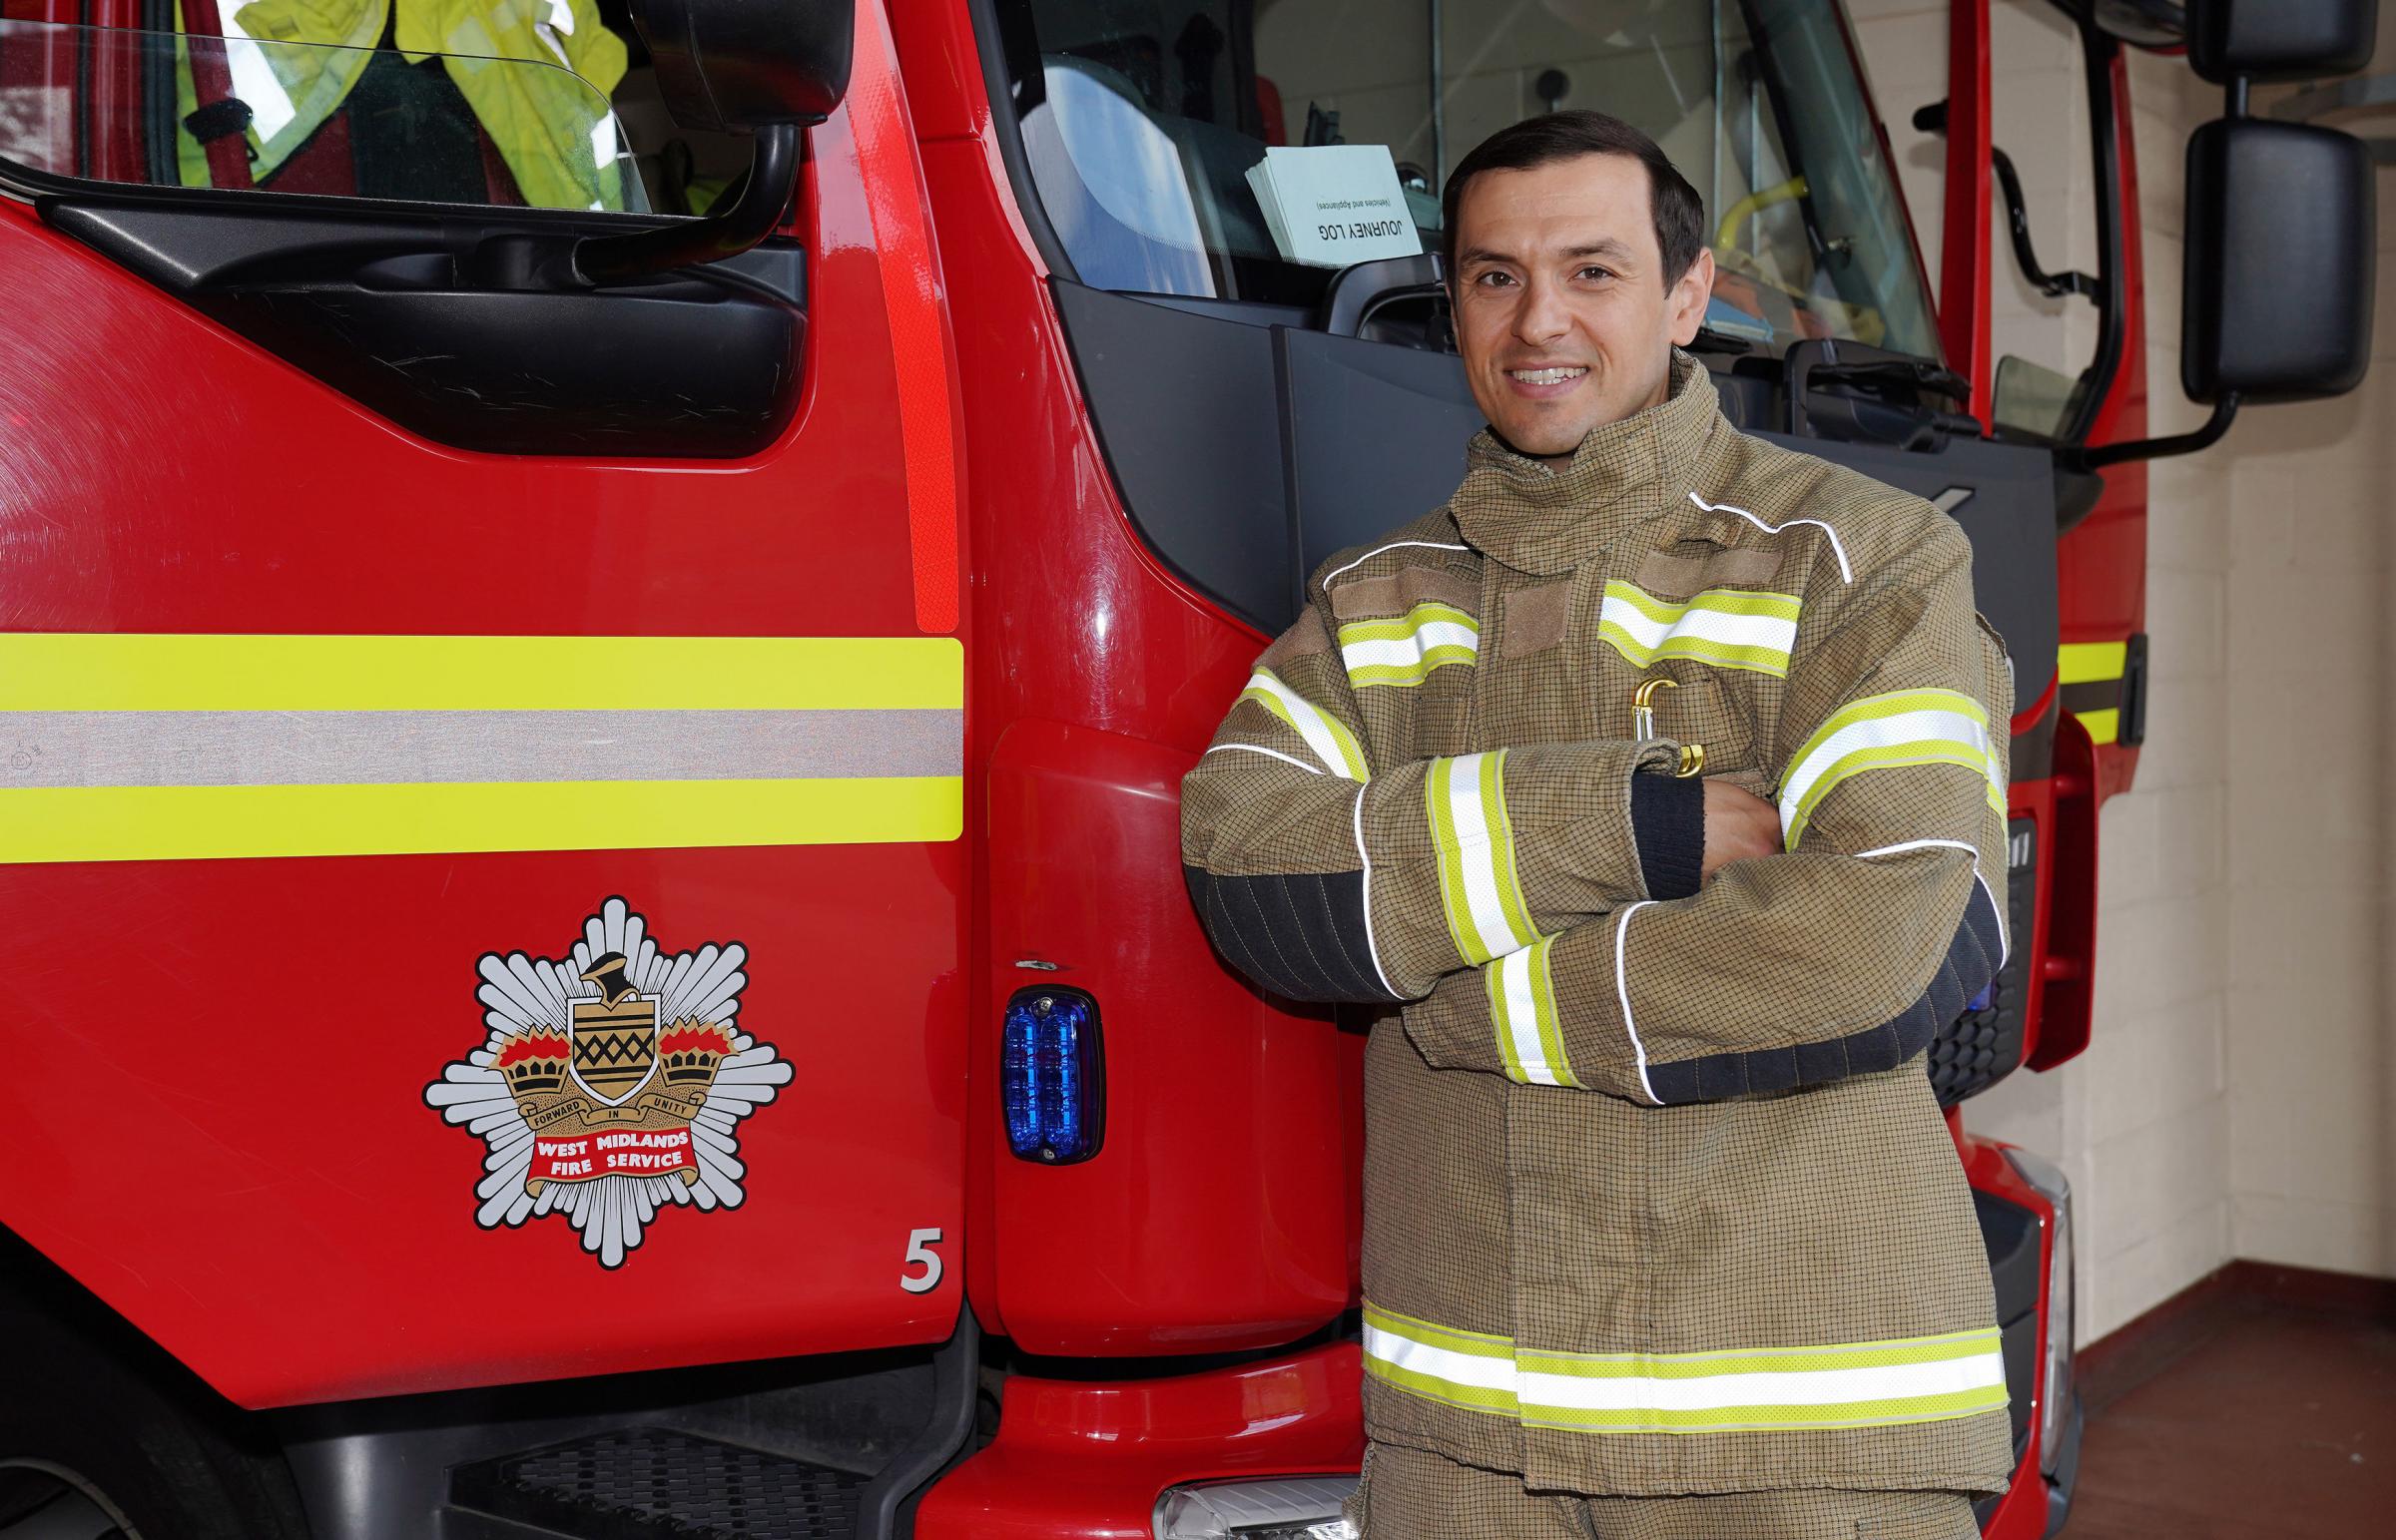 Football player turned firefighter Alex Nicholls at Haden Cross fire station in Halesowen. Pic - David Davies/PA Wire